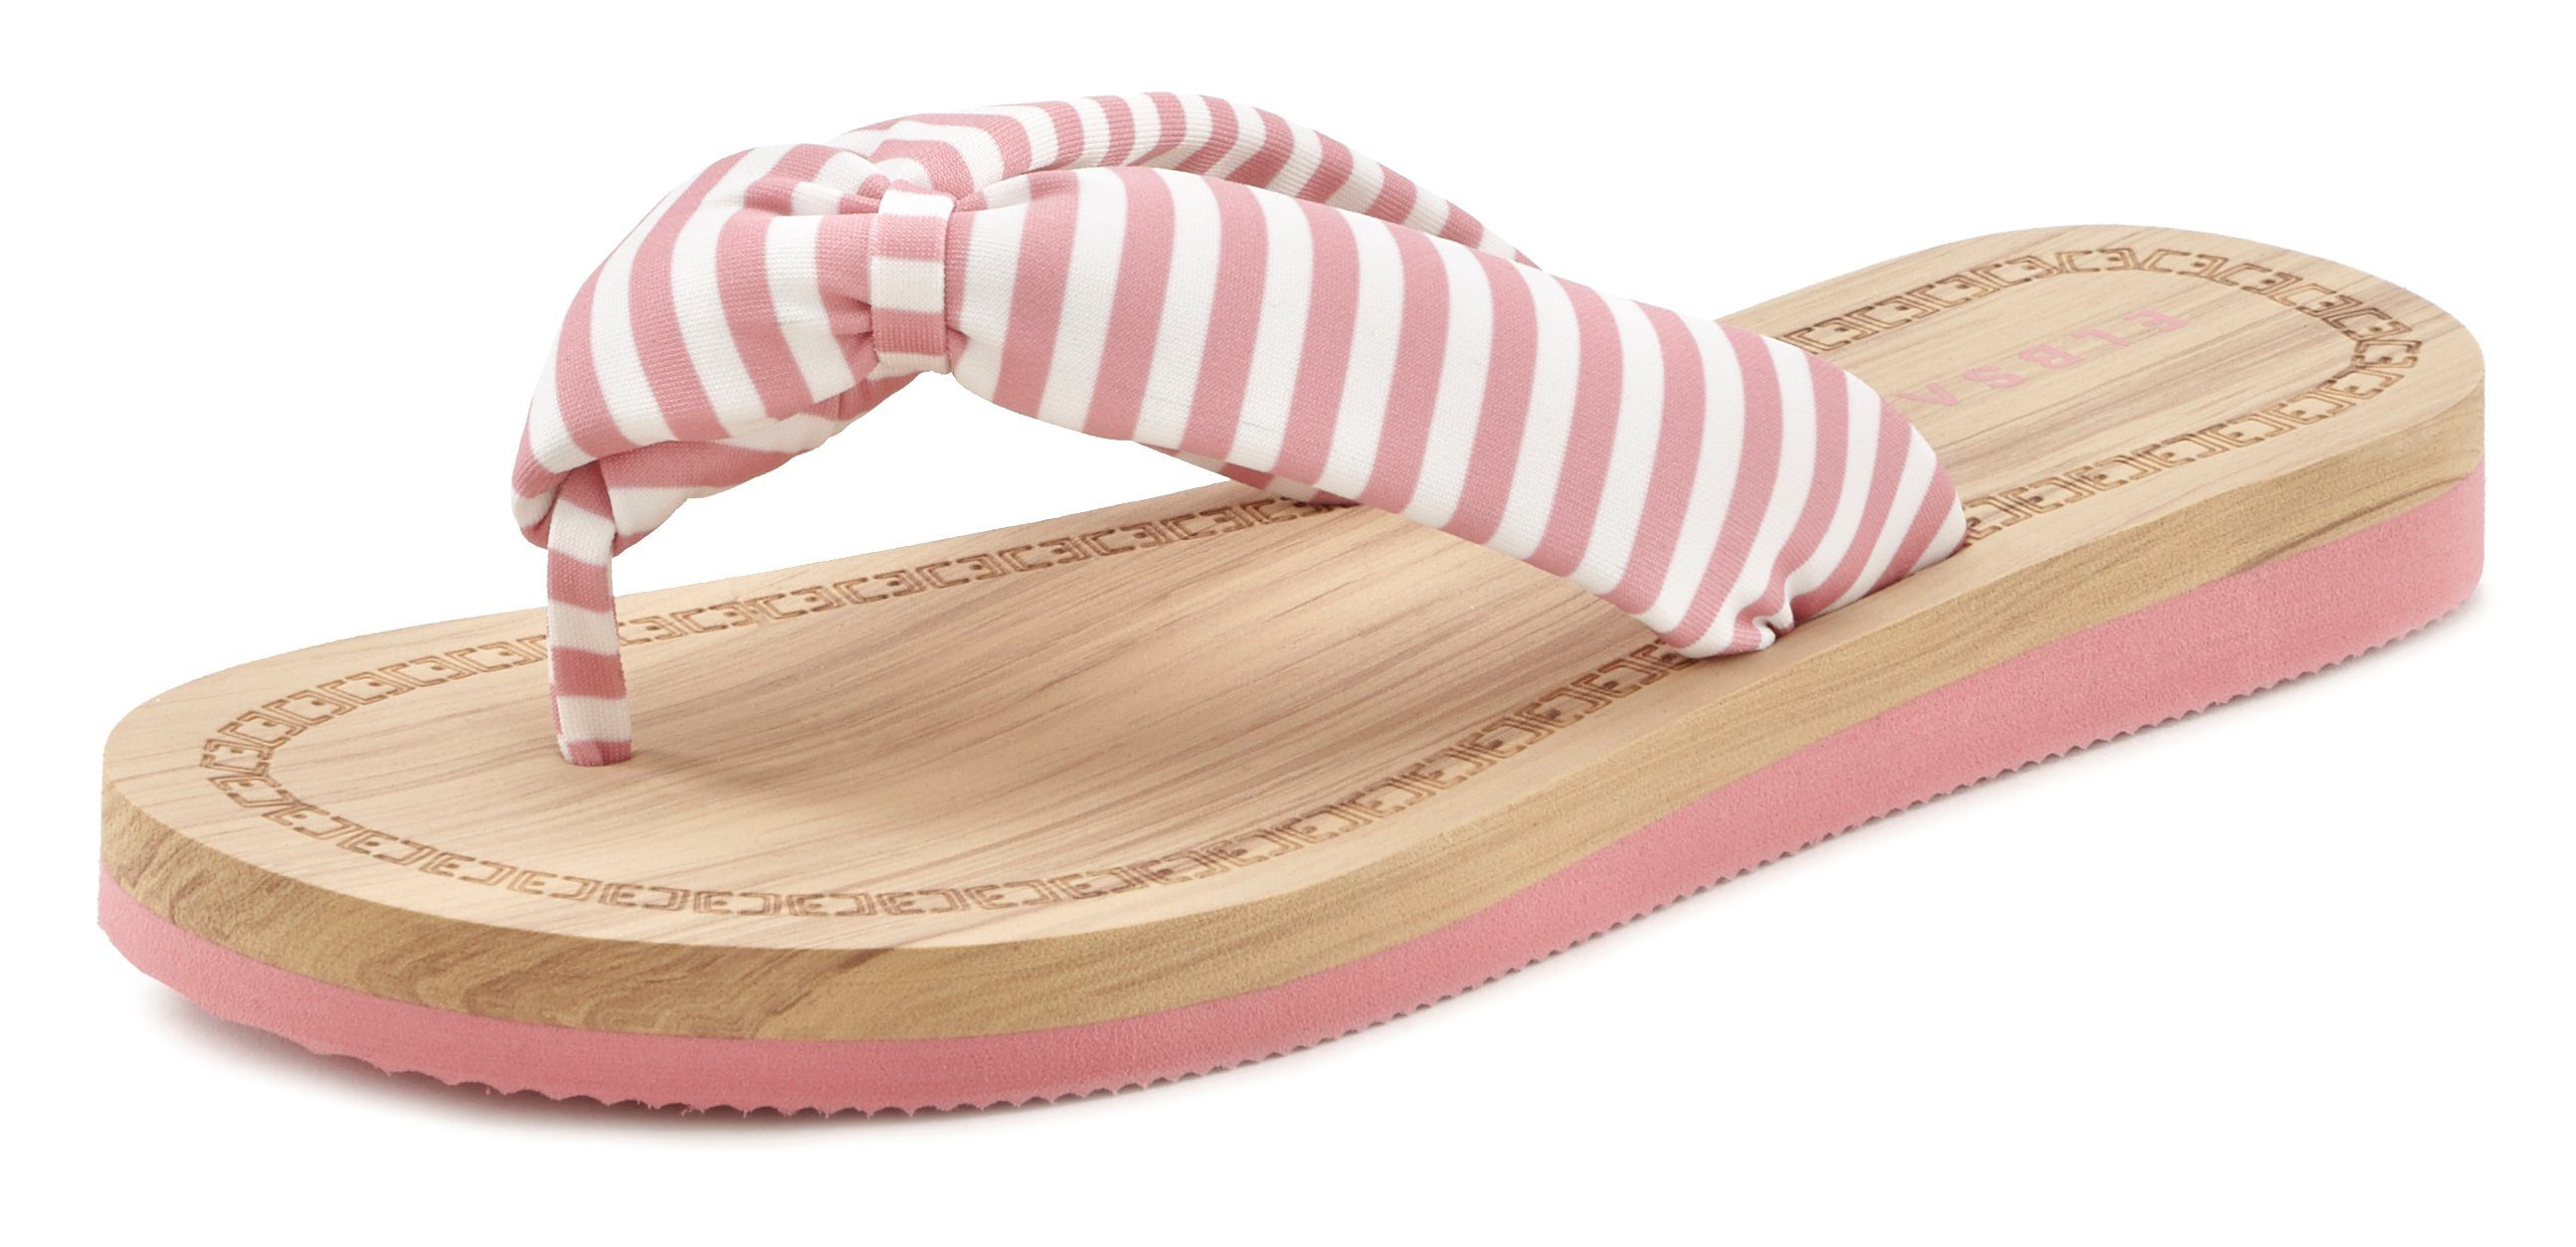 Elbsand Badezehentrenner Sandale, Pantolette, rosa-gestreift VEGAN ultraleicht Badeschuh